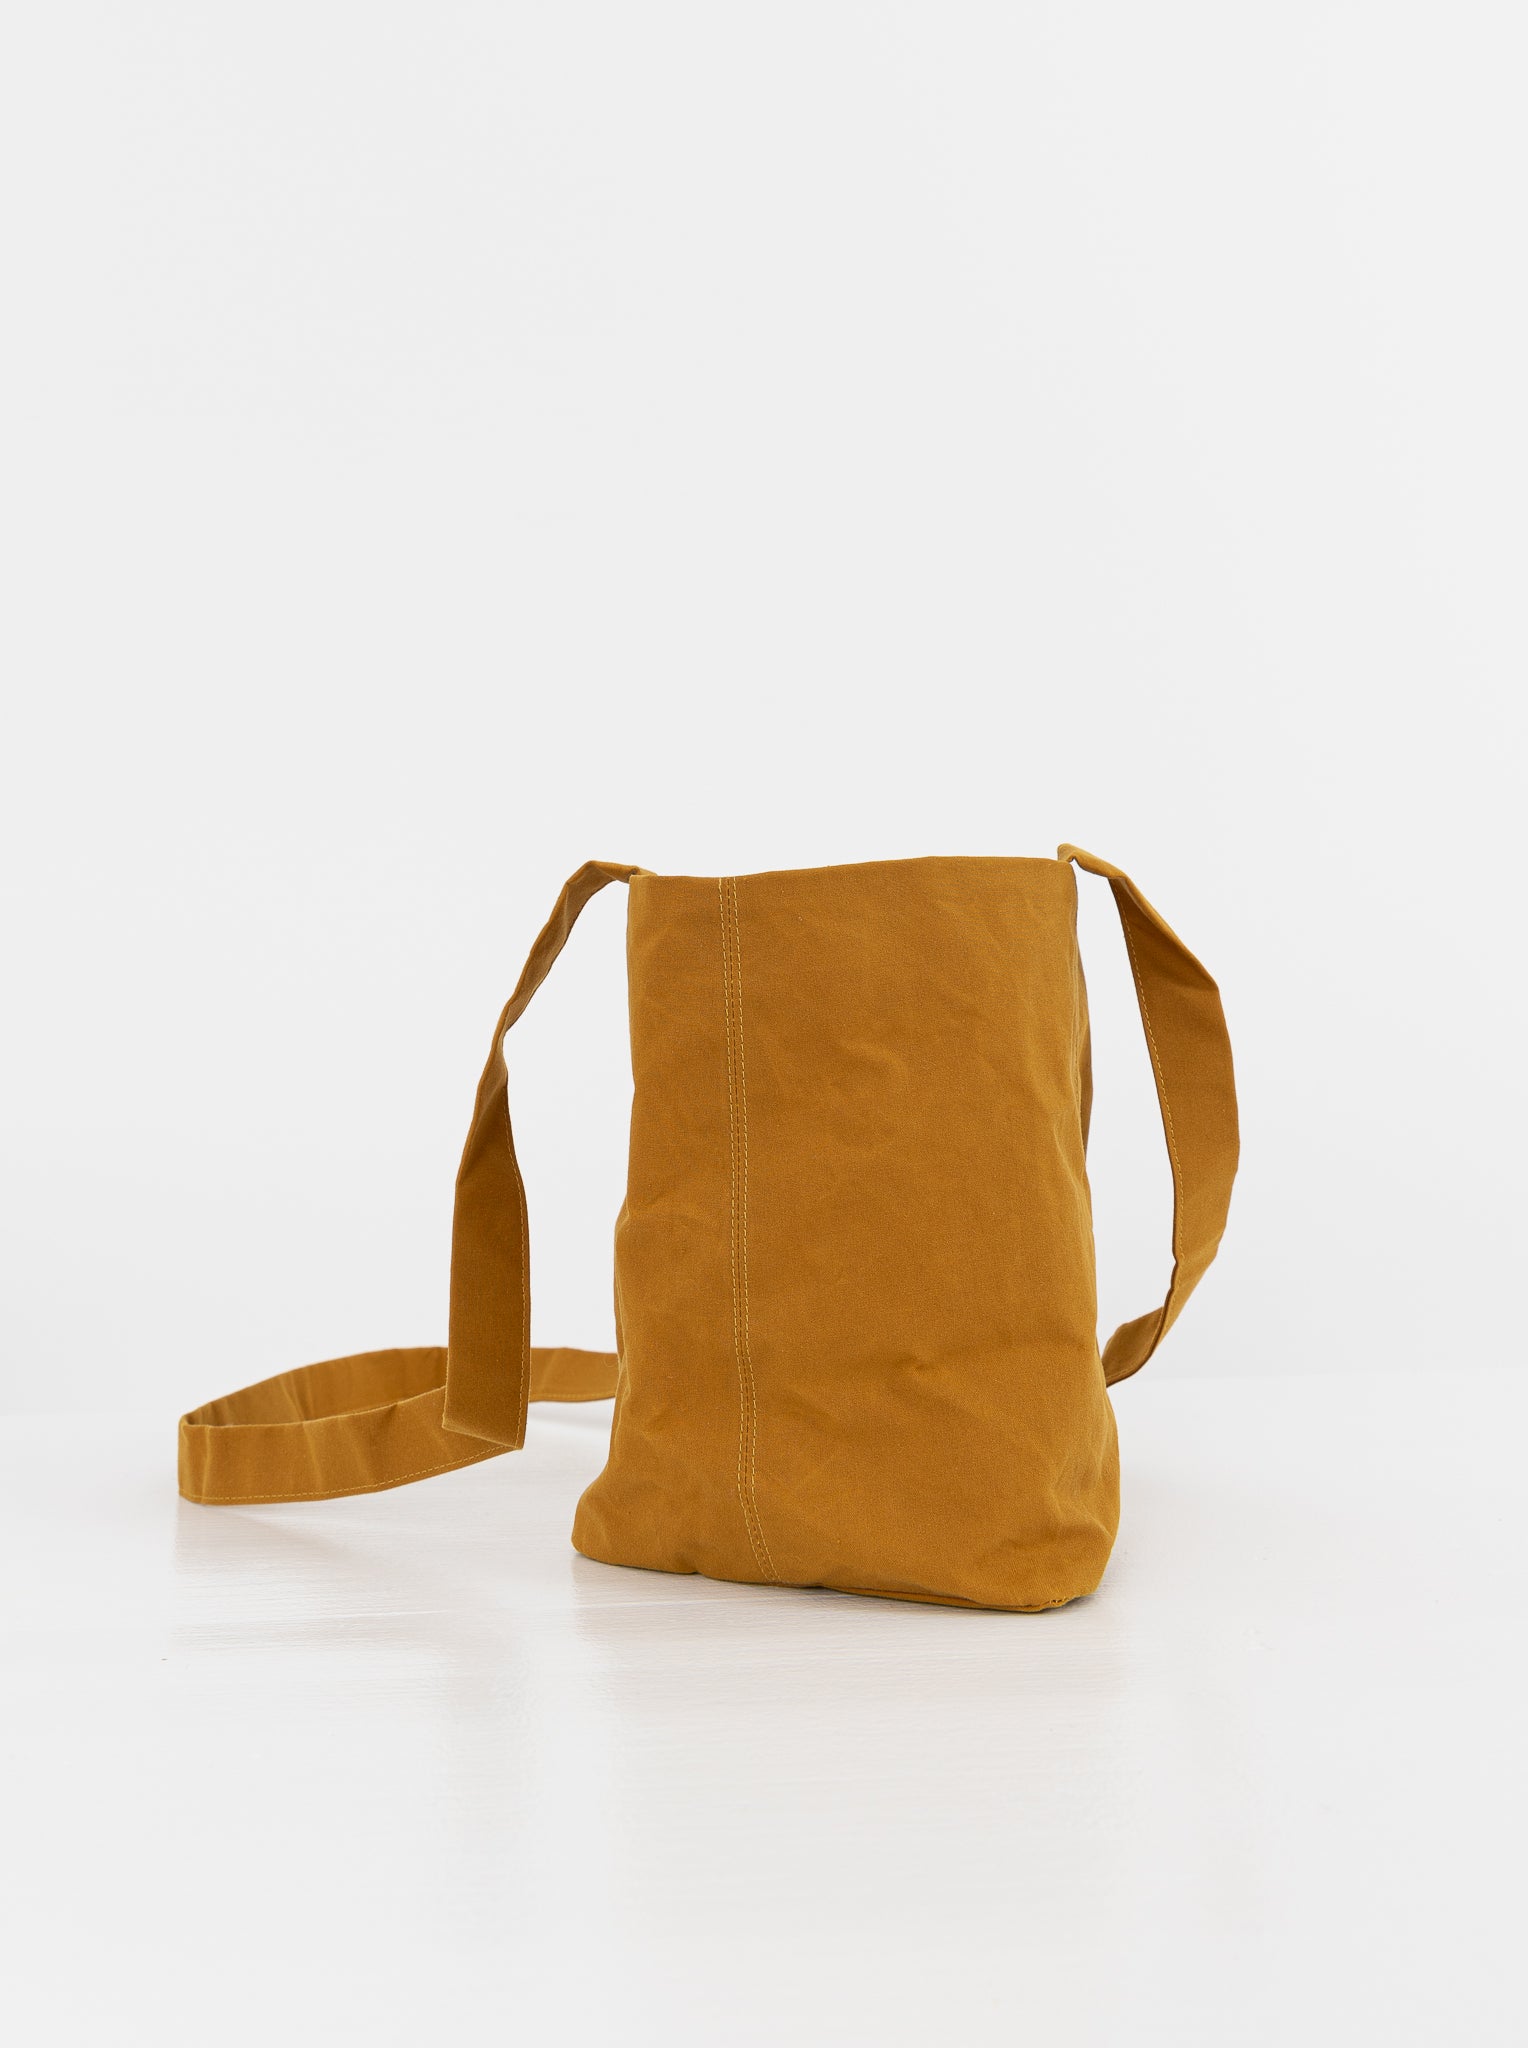 Studio Kettle Pint Bag, Mustard - Worthwhile